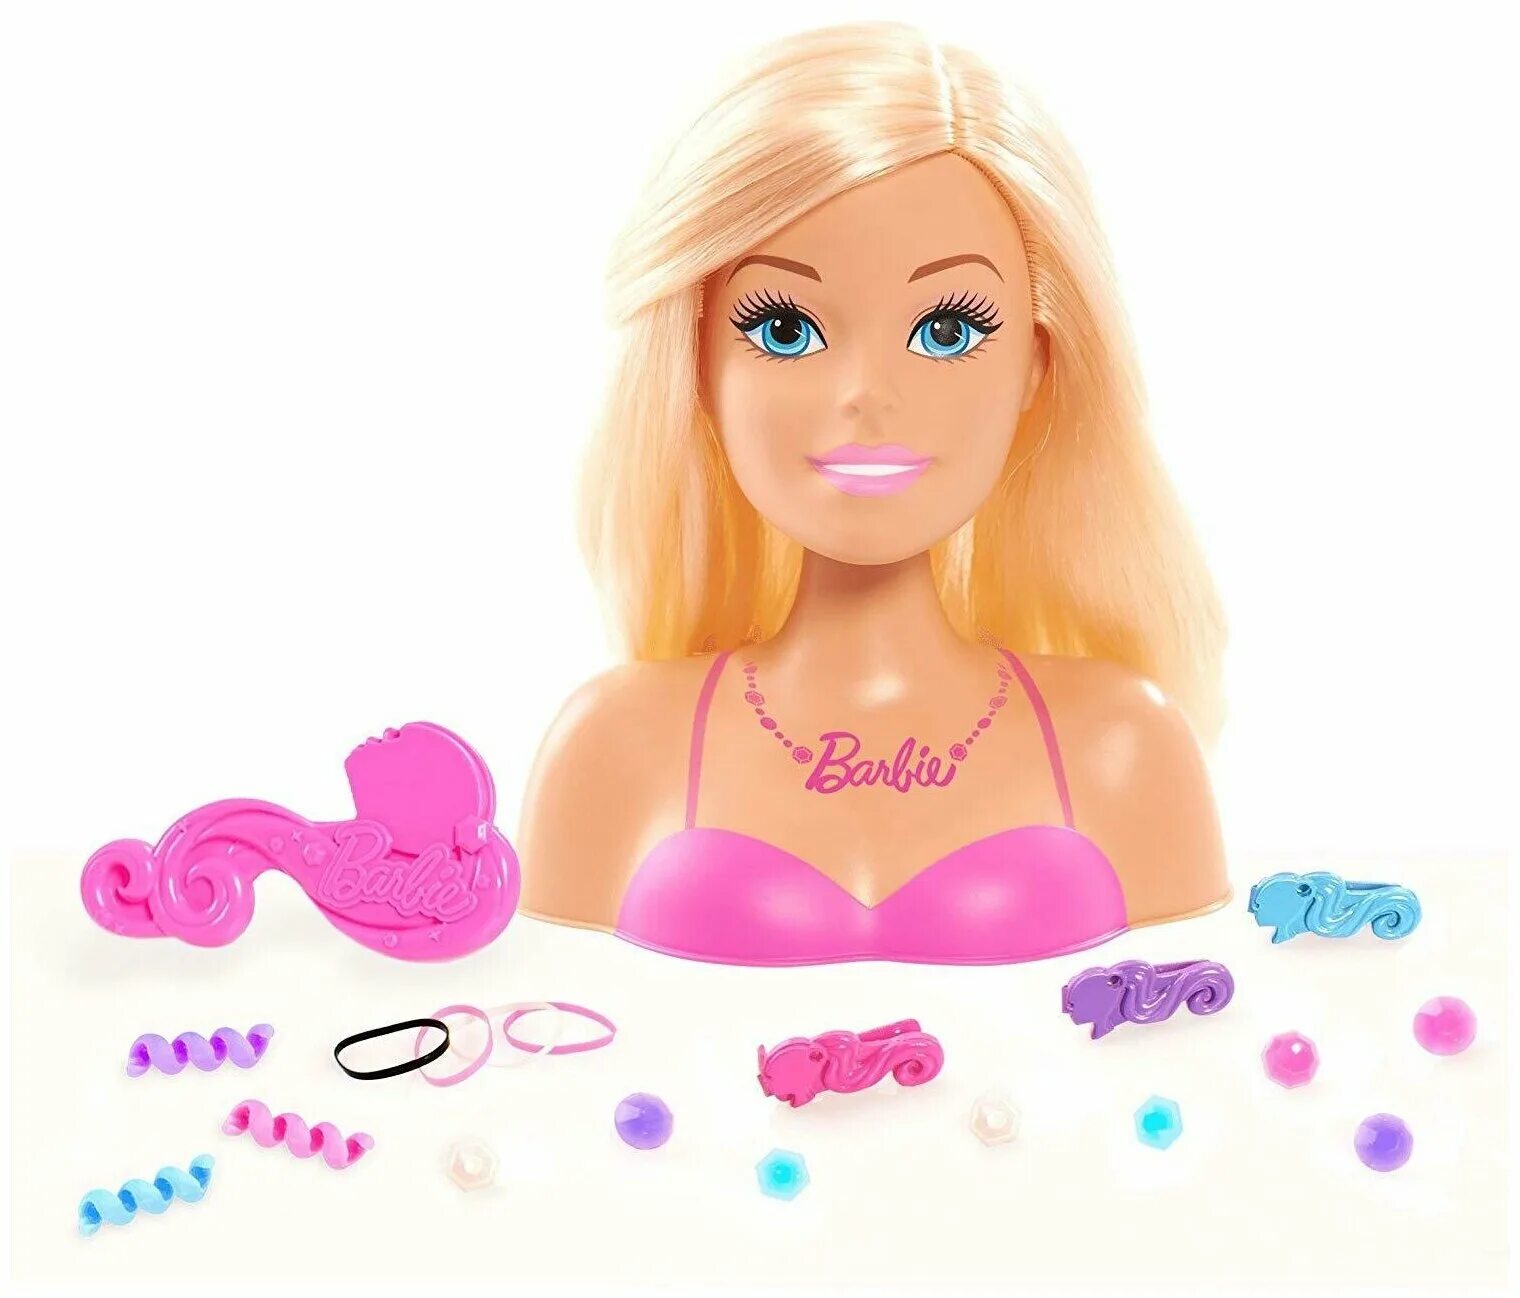 Blonde toys. Кукла Барби торс. Кукла манекен для причесок Барби. Кукла Барби манекен для причесок и макияжа. Голова Барби манекен для причесок.